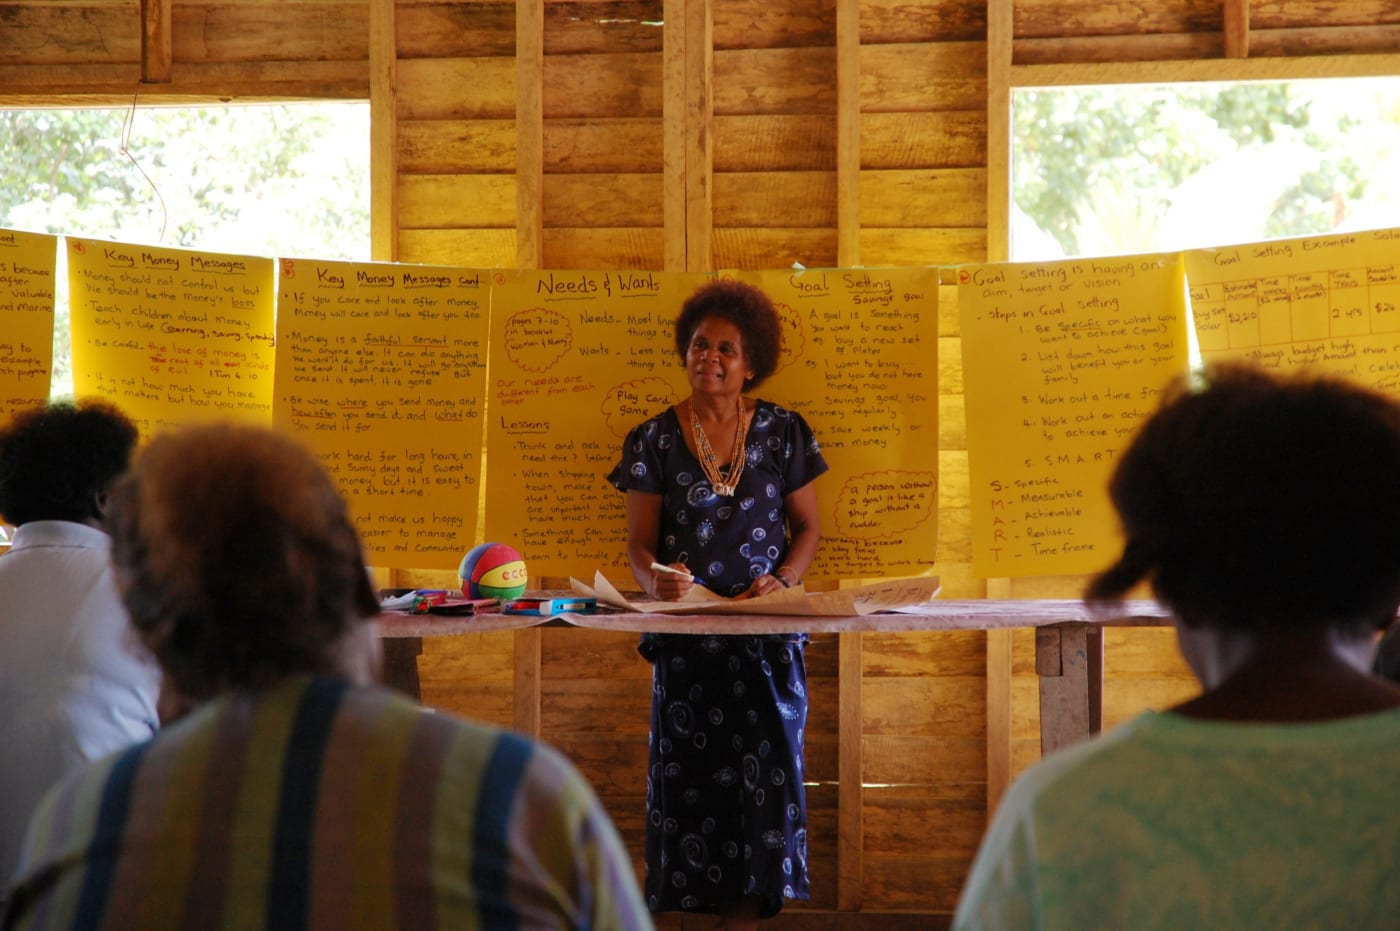 Women's microfinancing workshop, Vorivori, Ghizo Island, Solomon Islands. 21 January 2014
Dr. Alice Pollard engages women from zone 4.